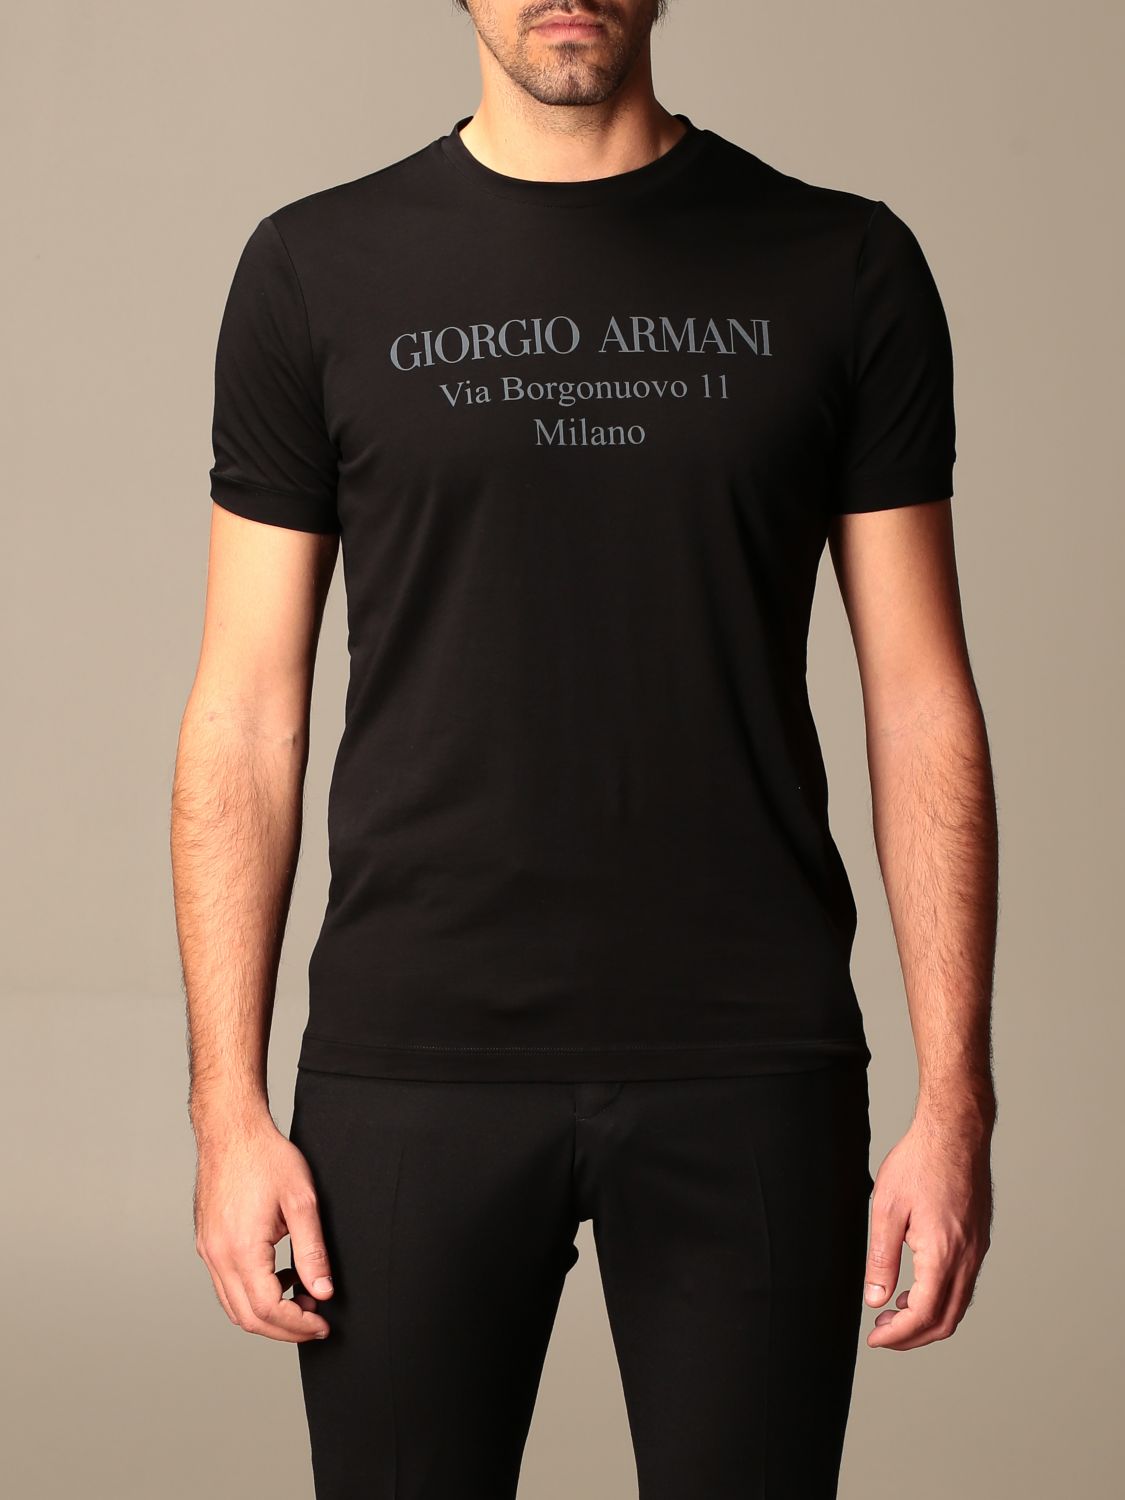 GIORGIO ARMANI: Camiseta para | Giorgio Armani 3GST57 SJMCZ en línea GIGLIO.COM